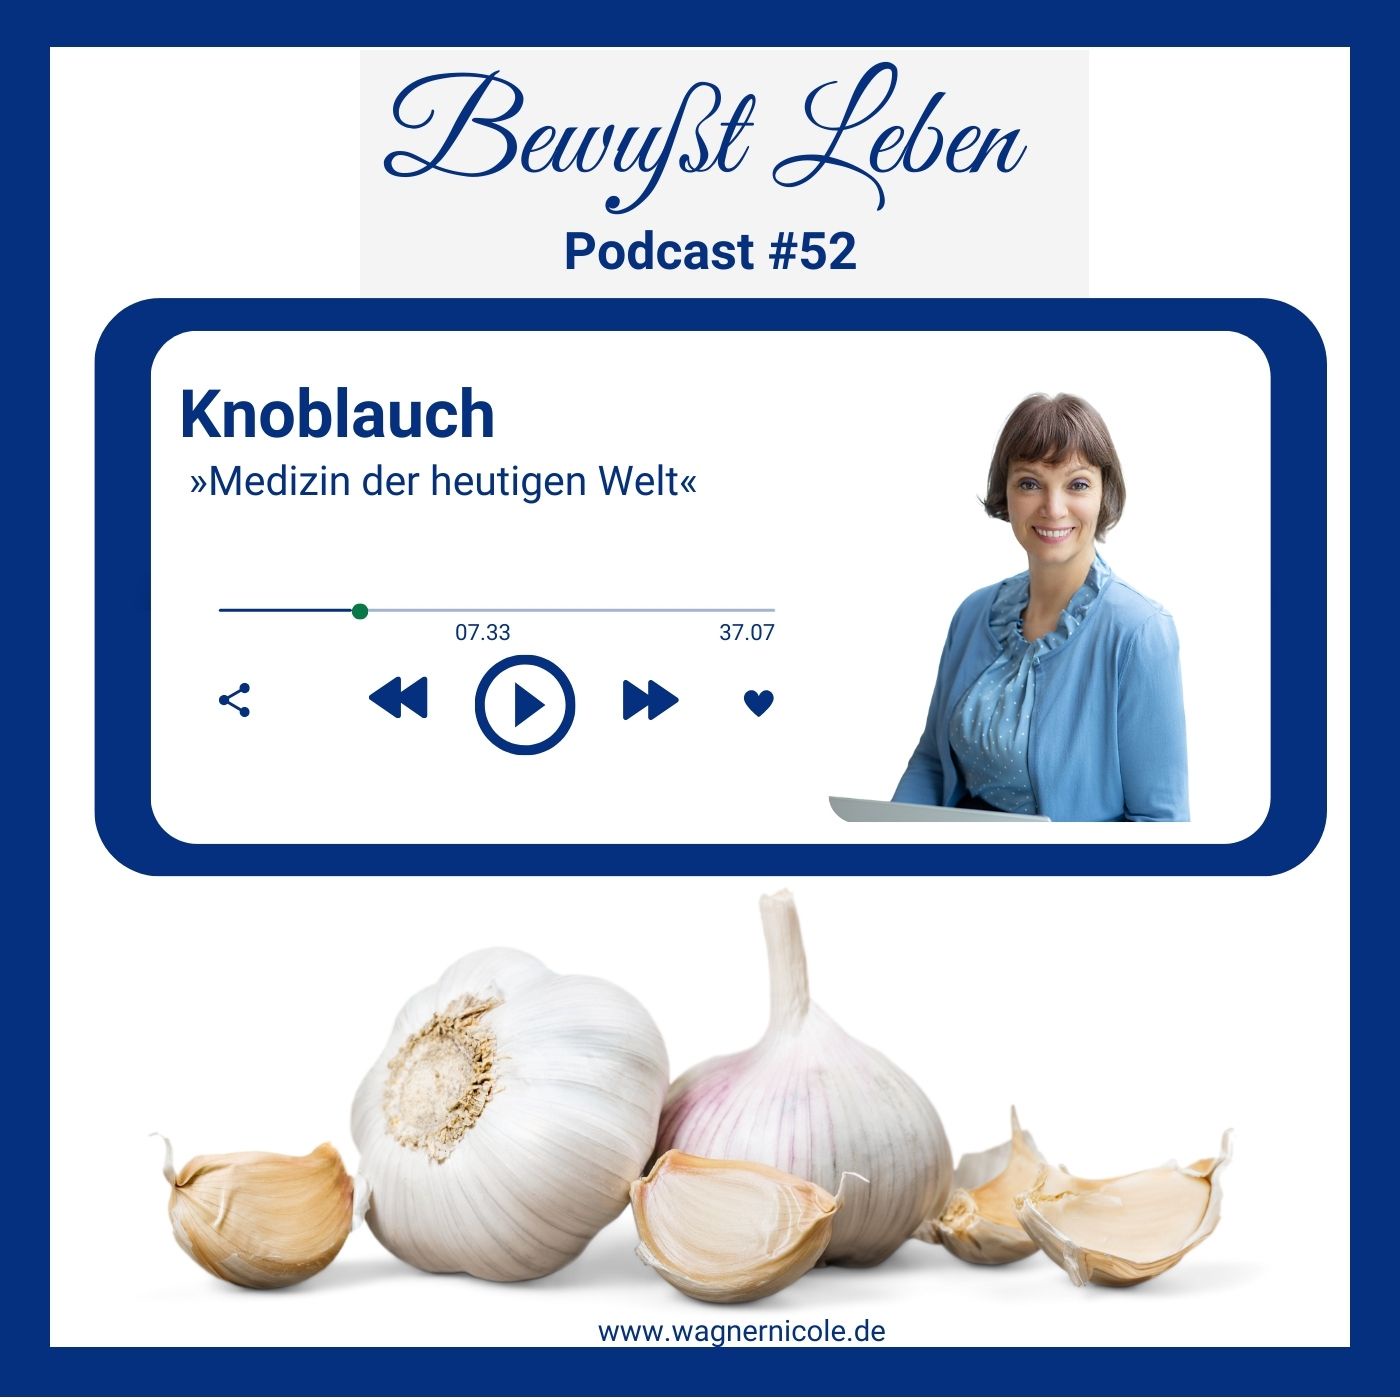 Knoblauch I »Medizin der heutigen Welt« I Podcast #52